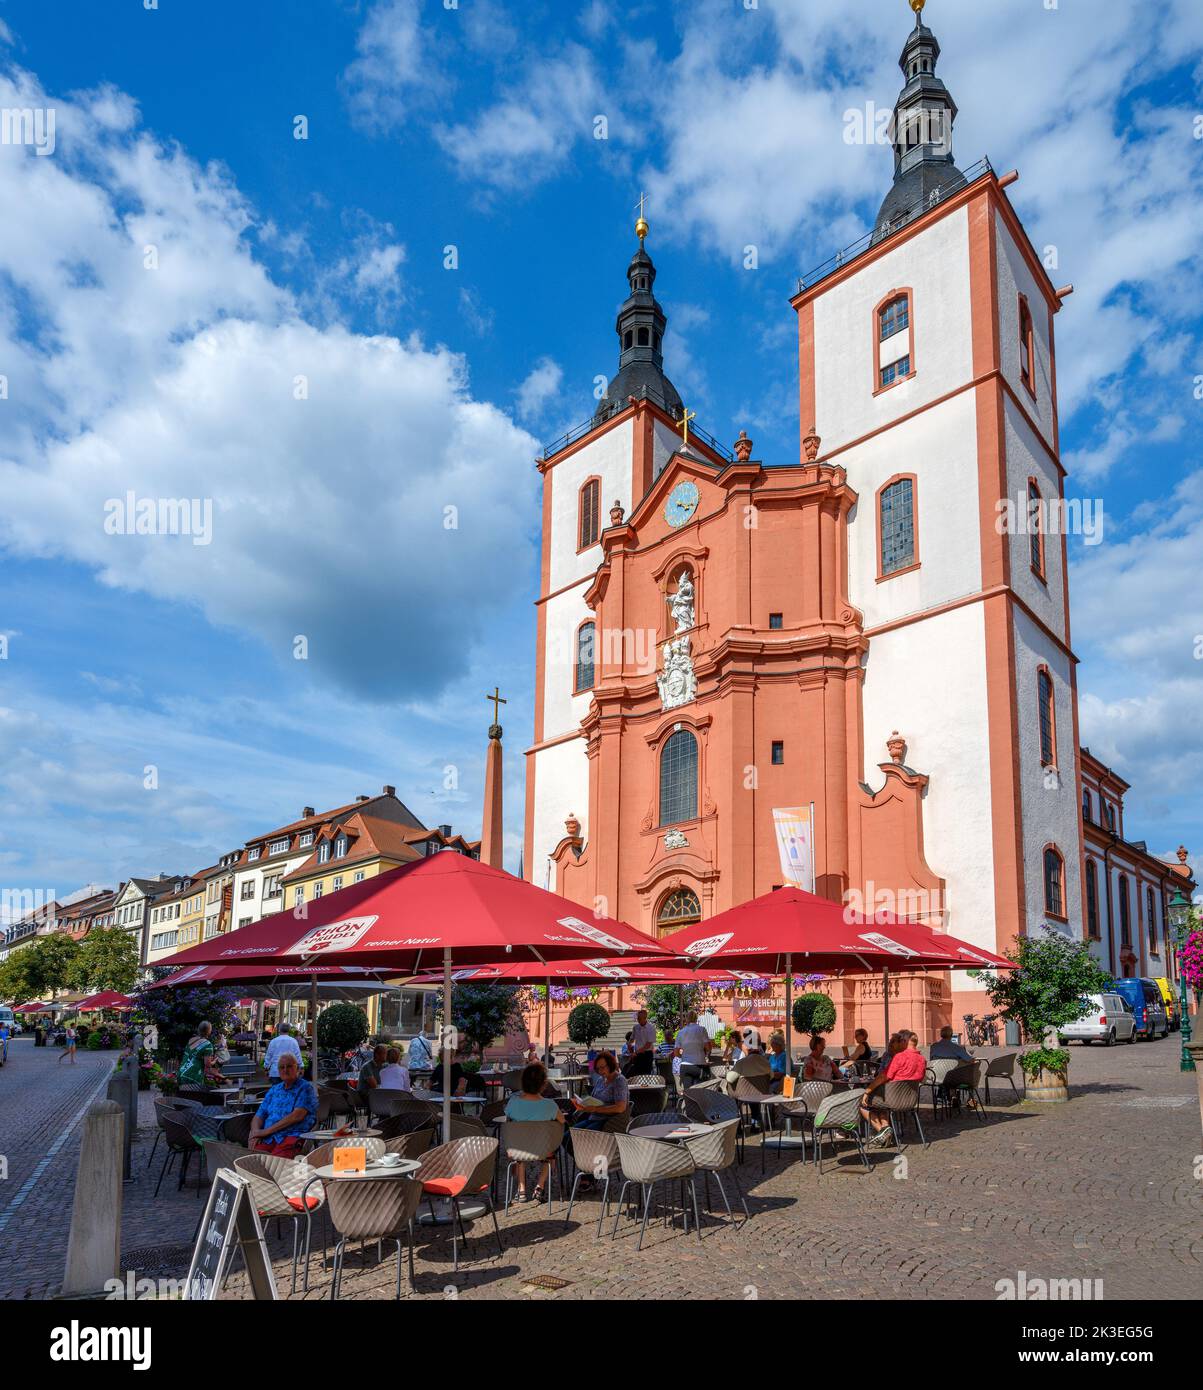 Cafe in front of the Parish Church of St. Blaise, Unterm Heilig Kreuz, Old Town (Altstadt), Fulda, Germany Stock Photo